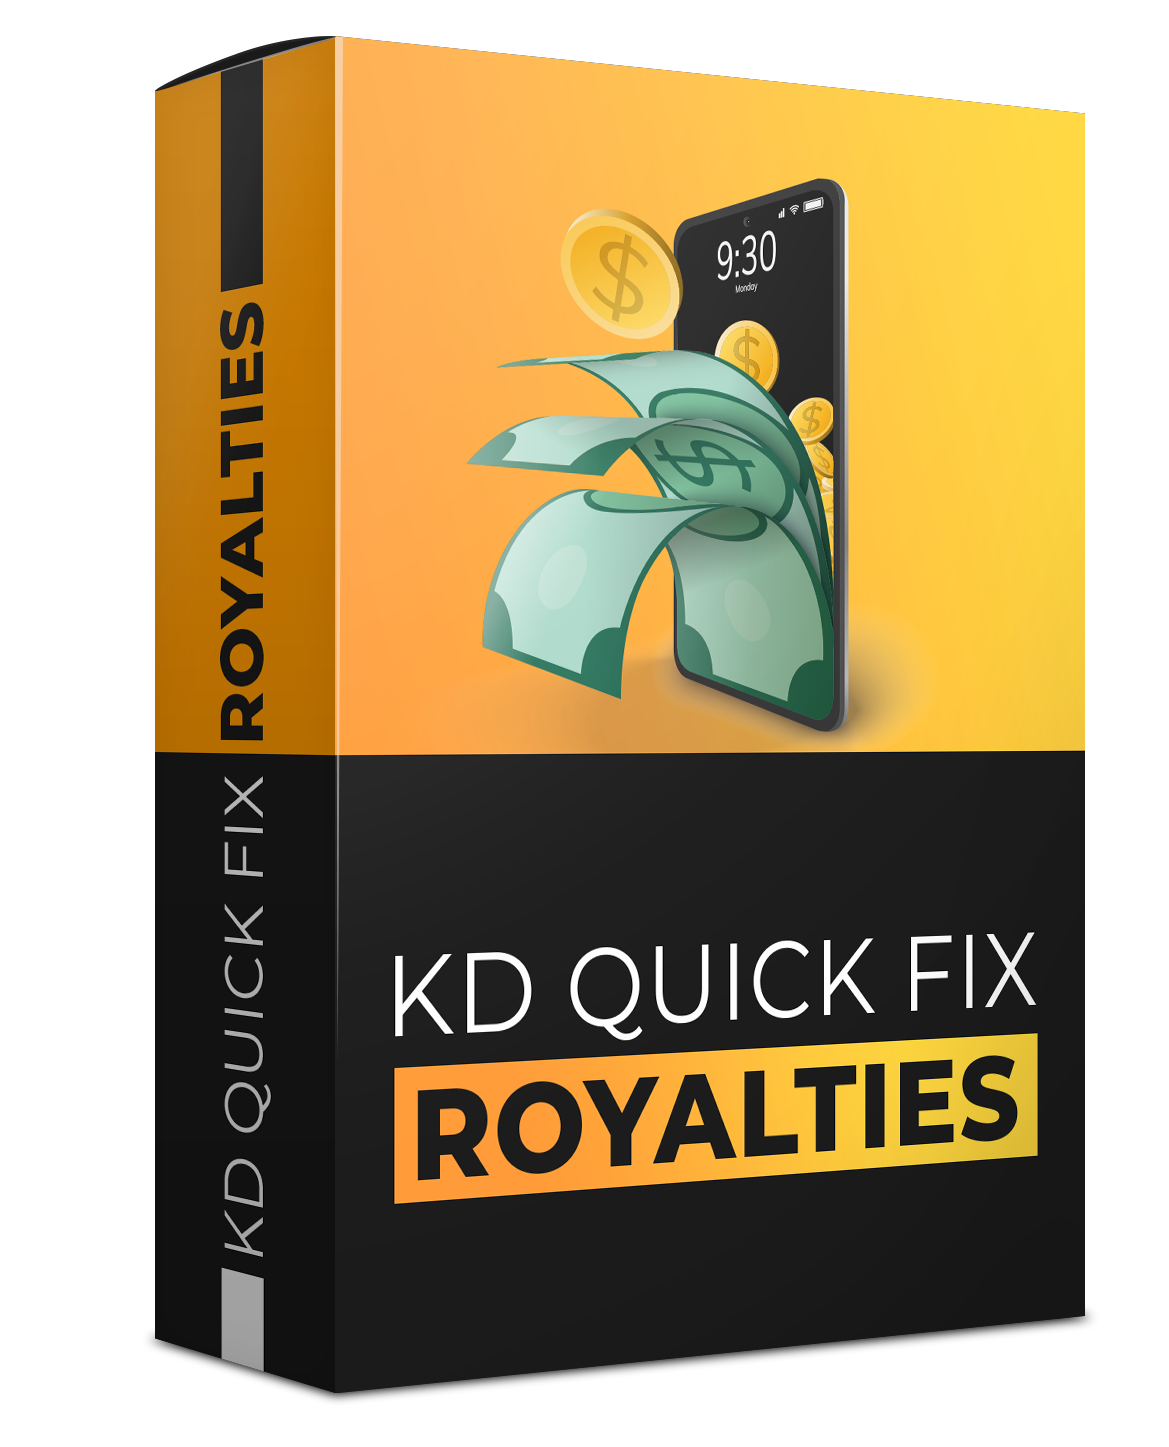 KD Quick Fix Royalties By Andreas Quintana